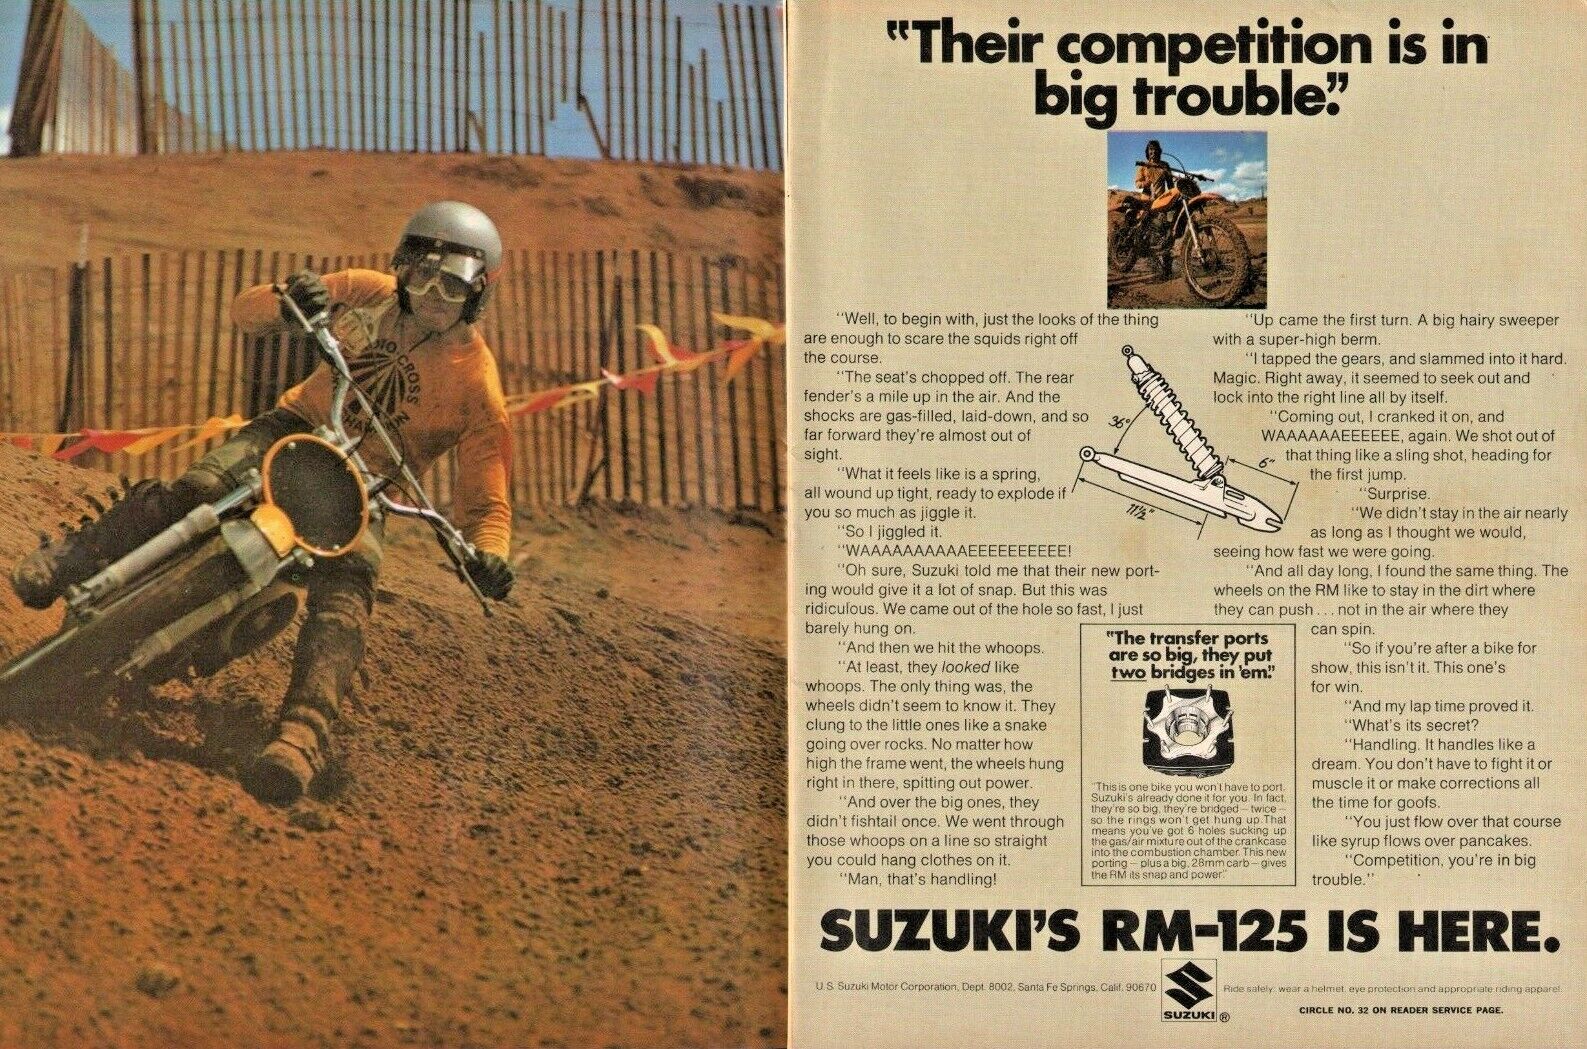 1975 Suzuki RM-125 - 3-Page Vintage Motorcycle Ad